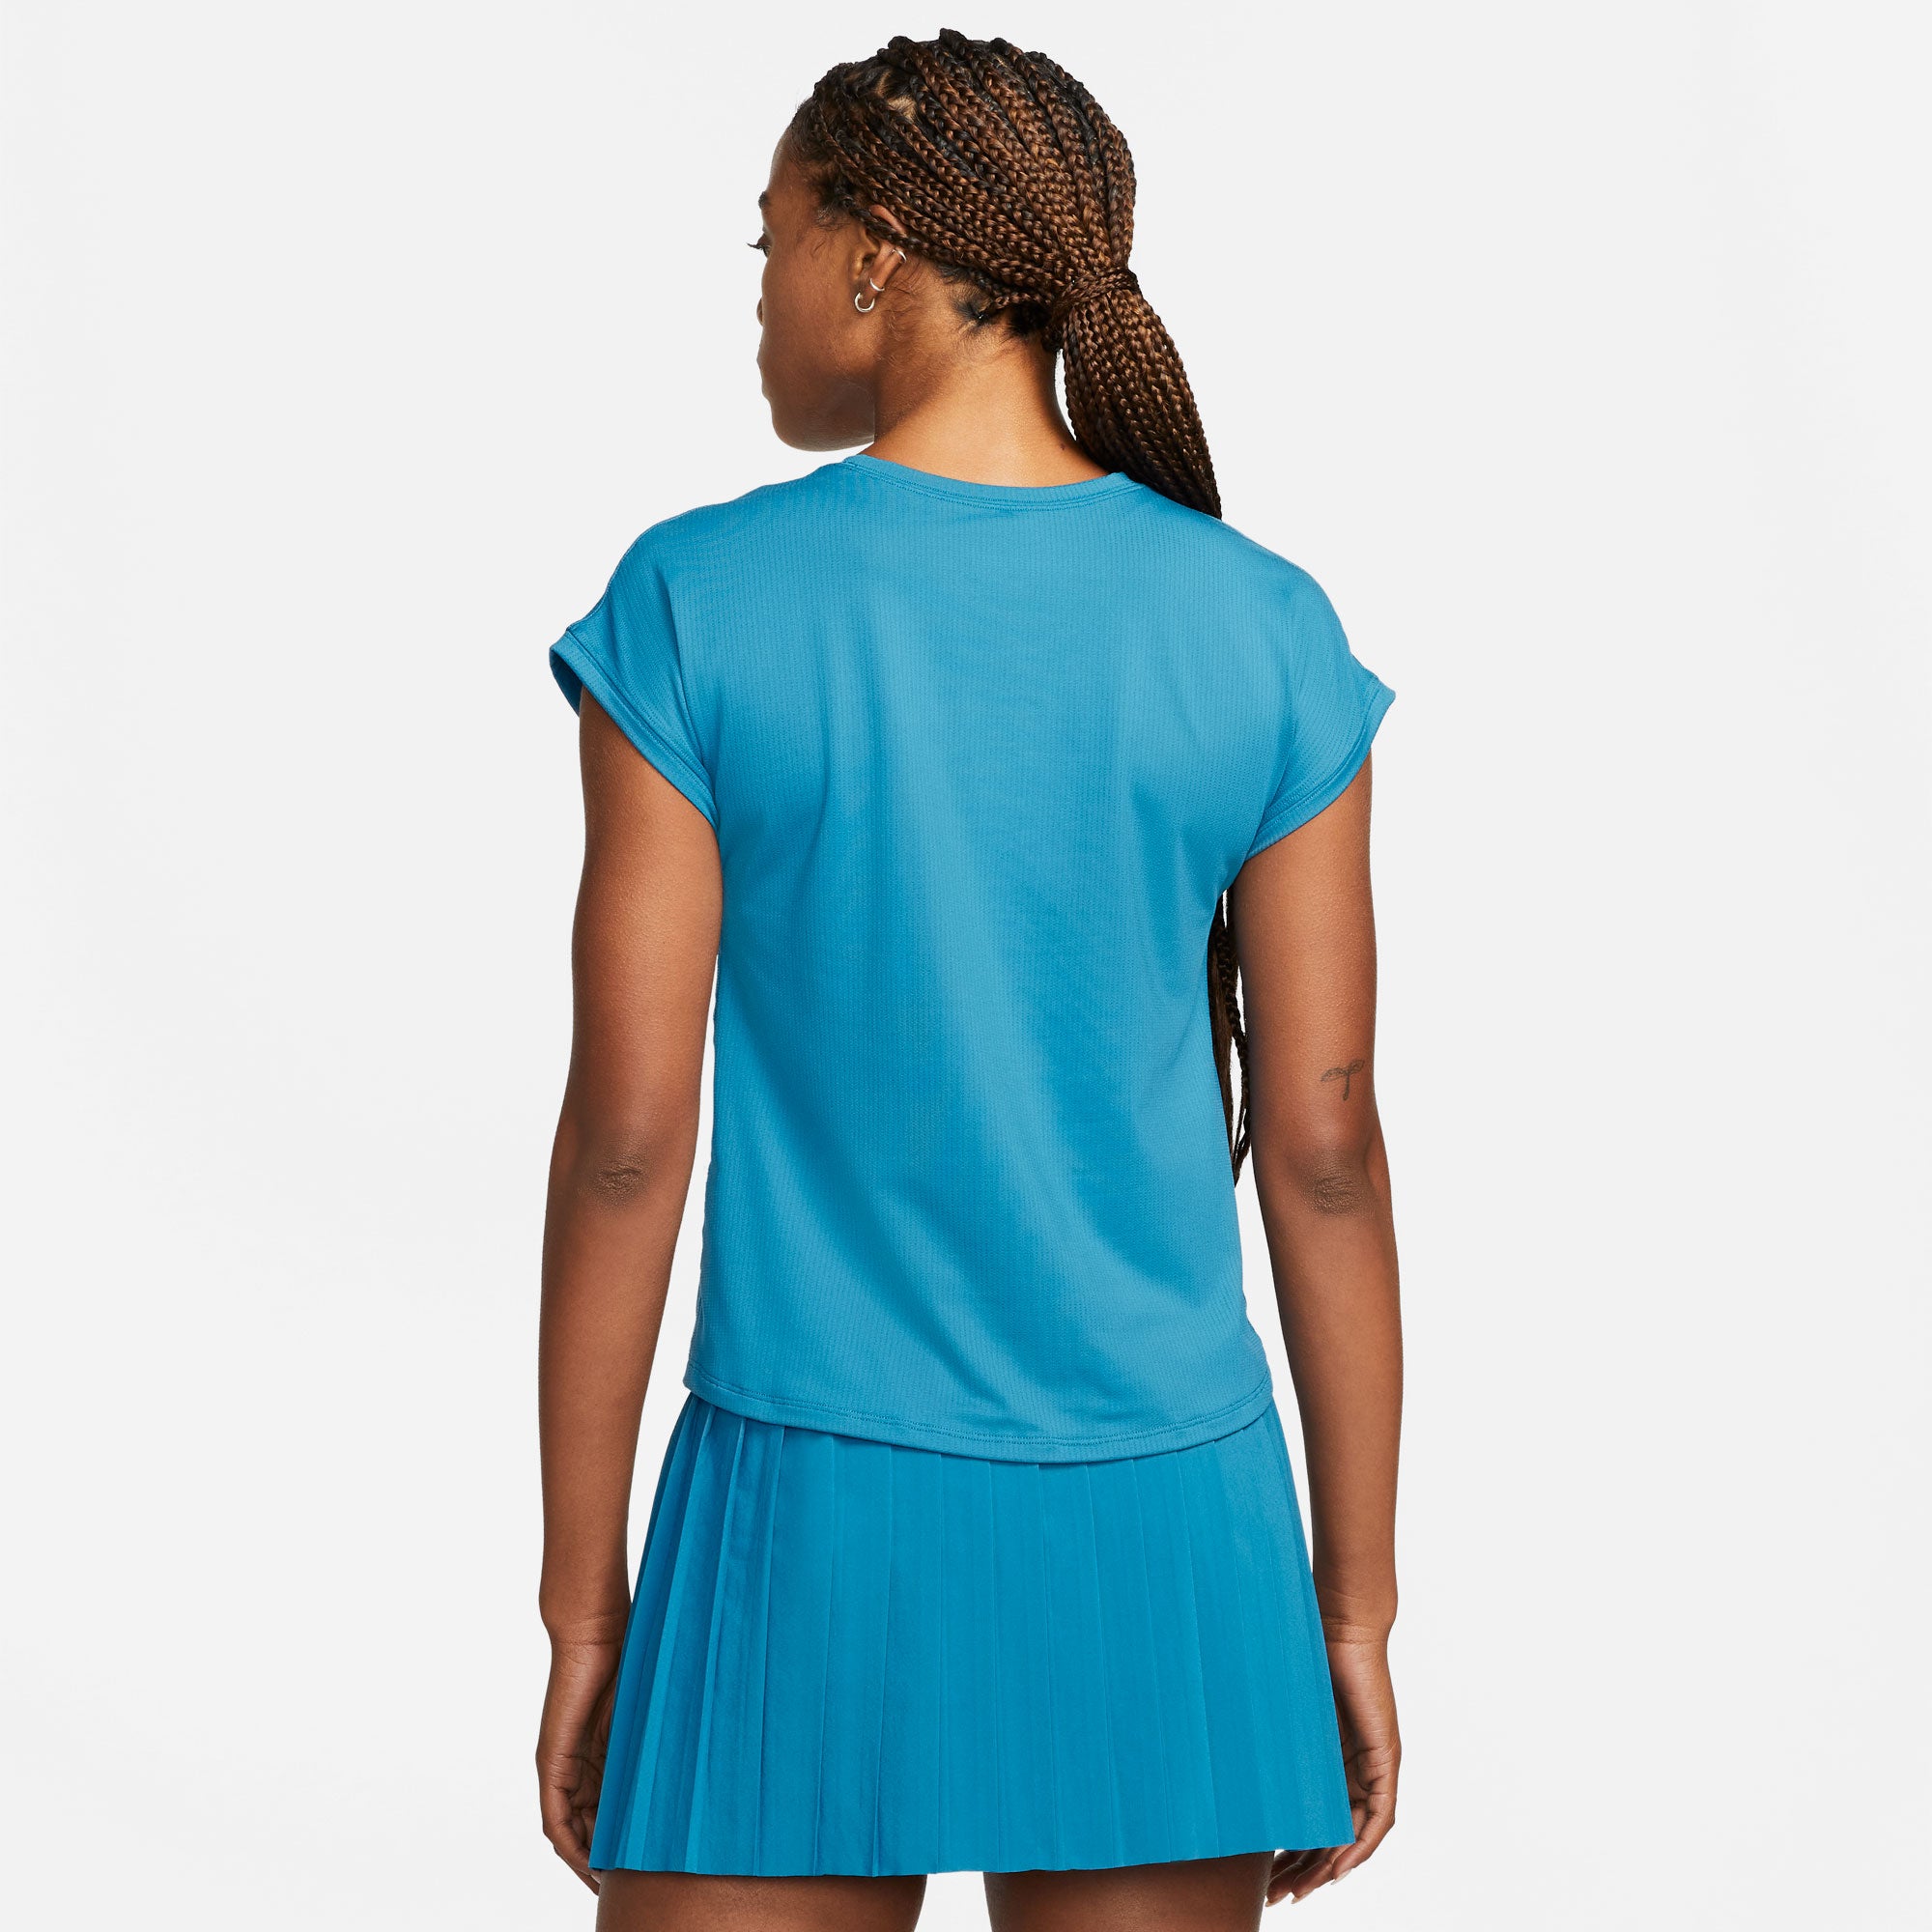 Nike Dri-FIT Victory Women's Tennis Shirt Blue (2)